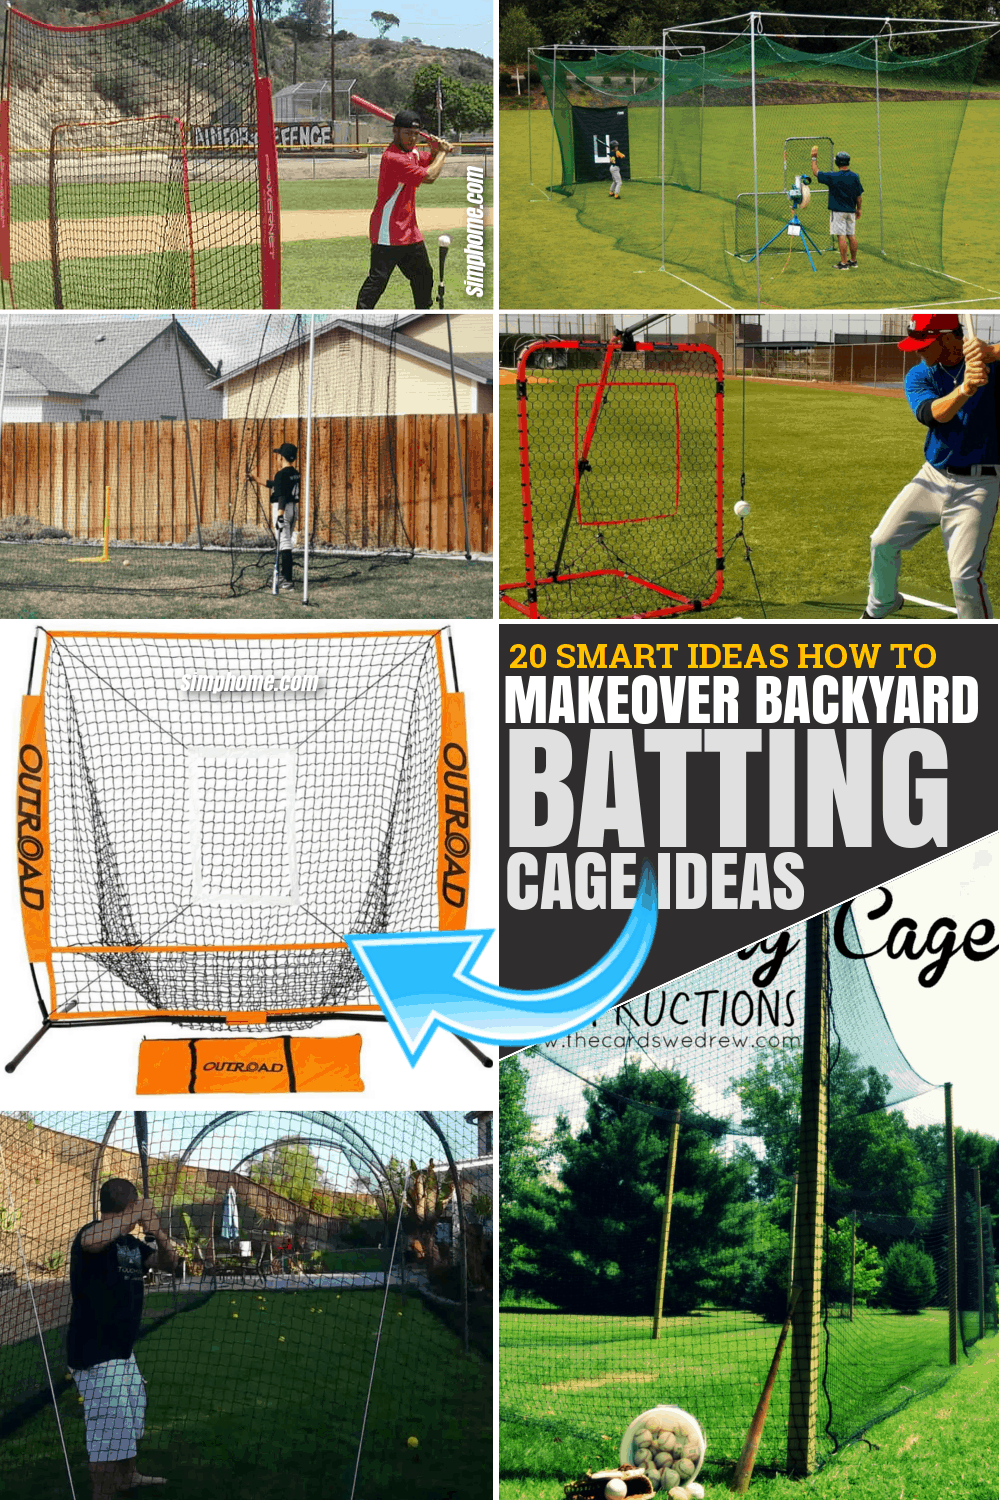 20 Smart Ideas How to Make Backyard Batting Cage Ideas via SIMPHOME.COM Featured Pinterest Image